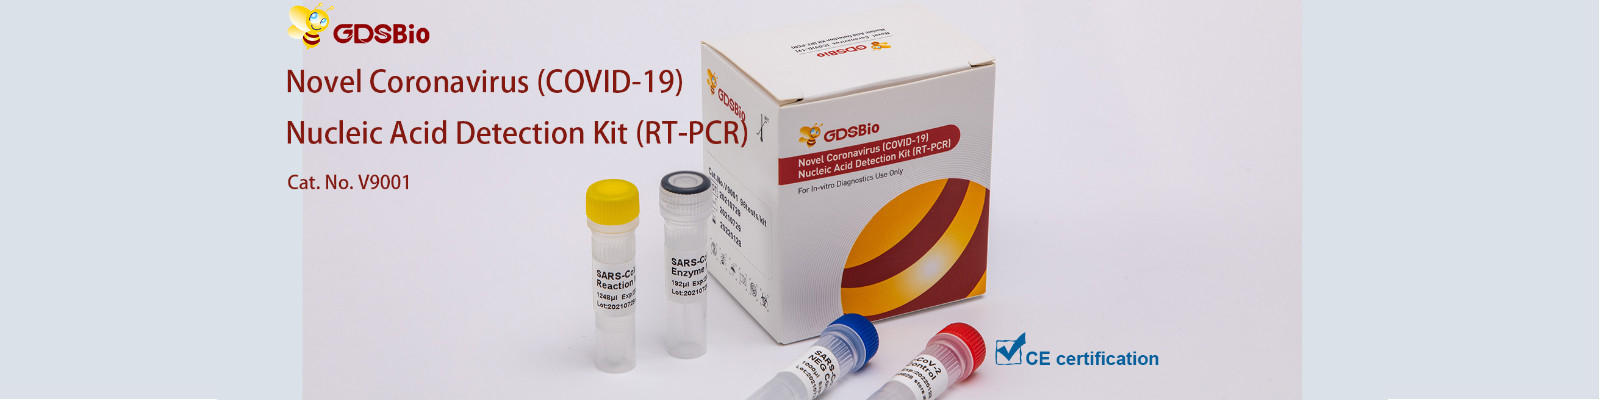 GDSBio Nucleic Acid Detection Kit Novel Coronavirus COVID-19 RT PCR